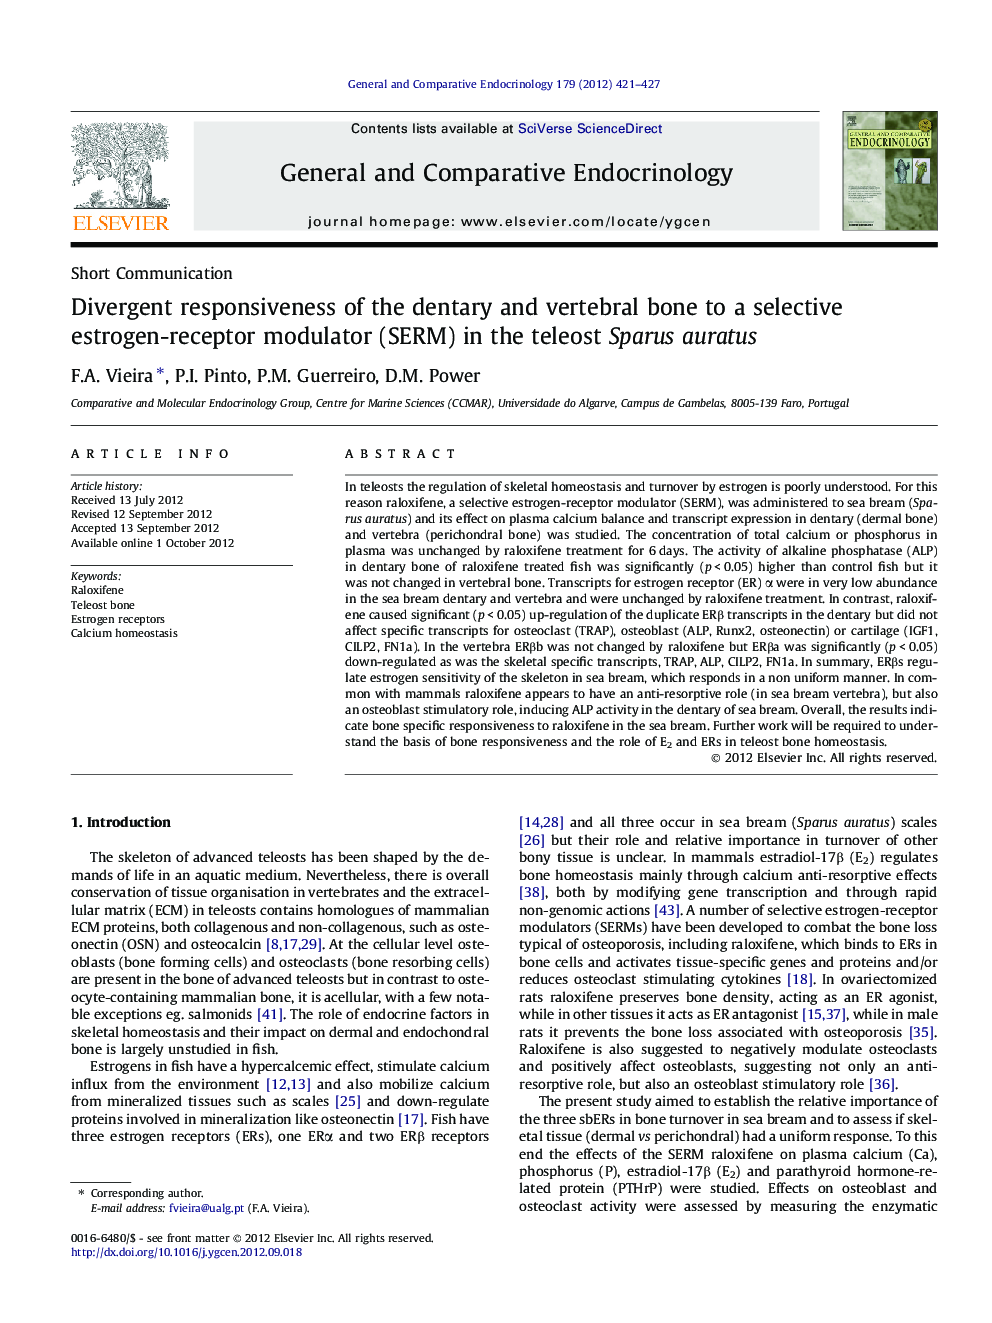 Divergent responsiveness of the dentary and vertebral bone to a selective estrogen-receptor modulator (SERM) in the teleost Sparus auratus